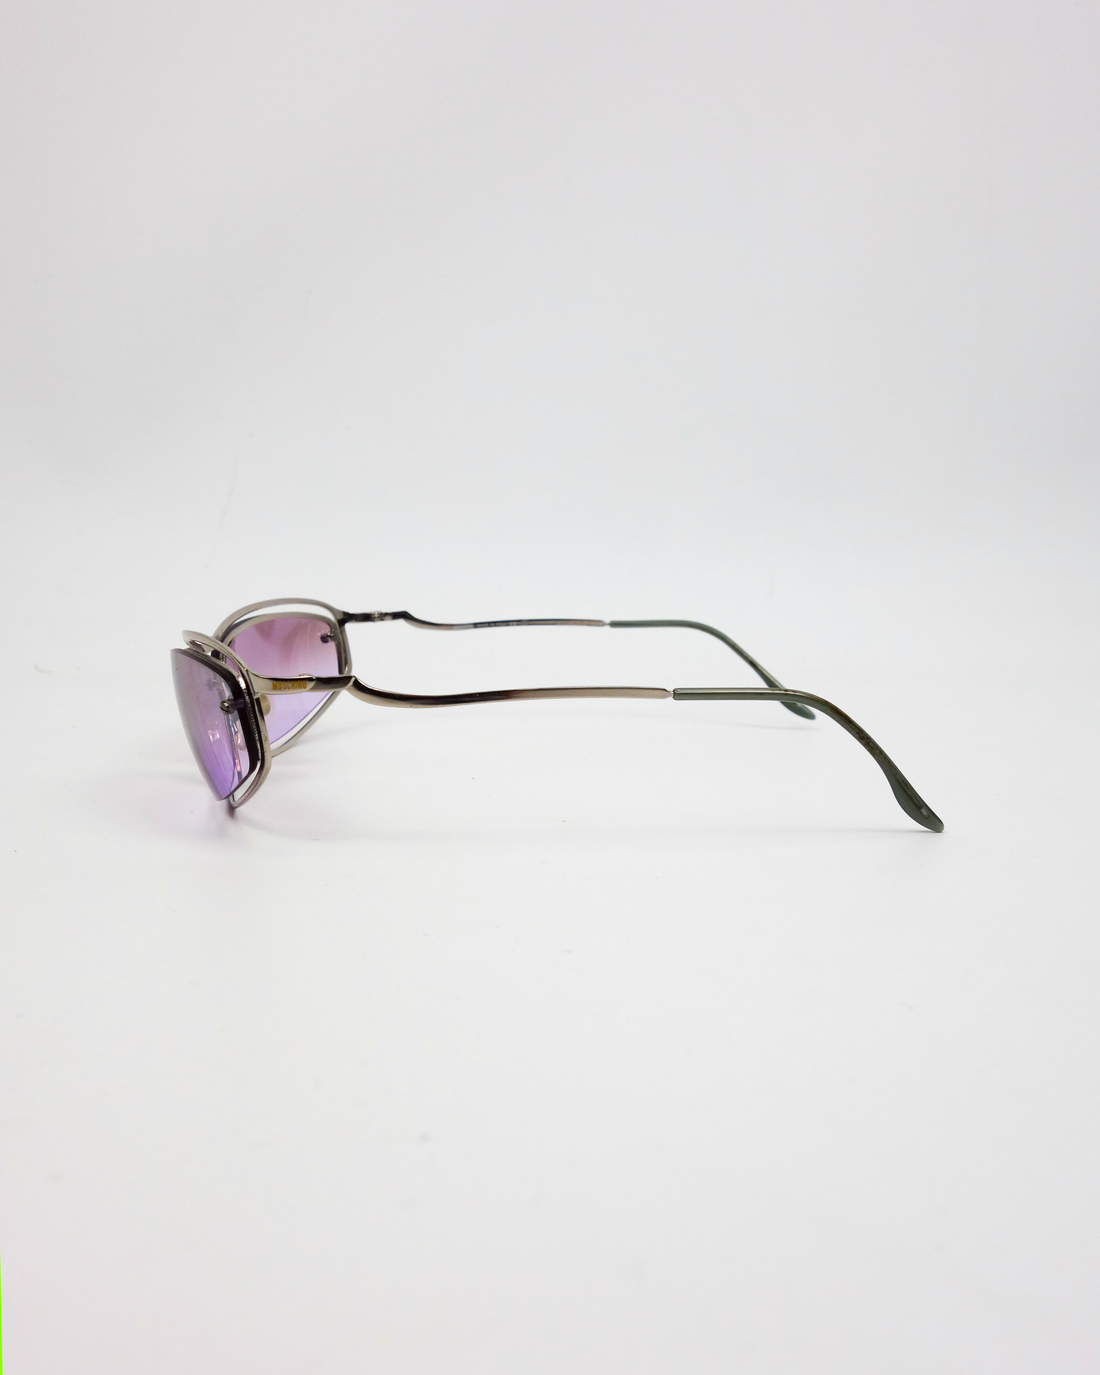 Moschino Silver Frame Purple Lens Sunglasses 2000's